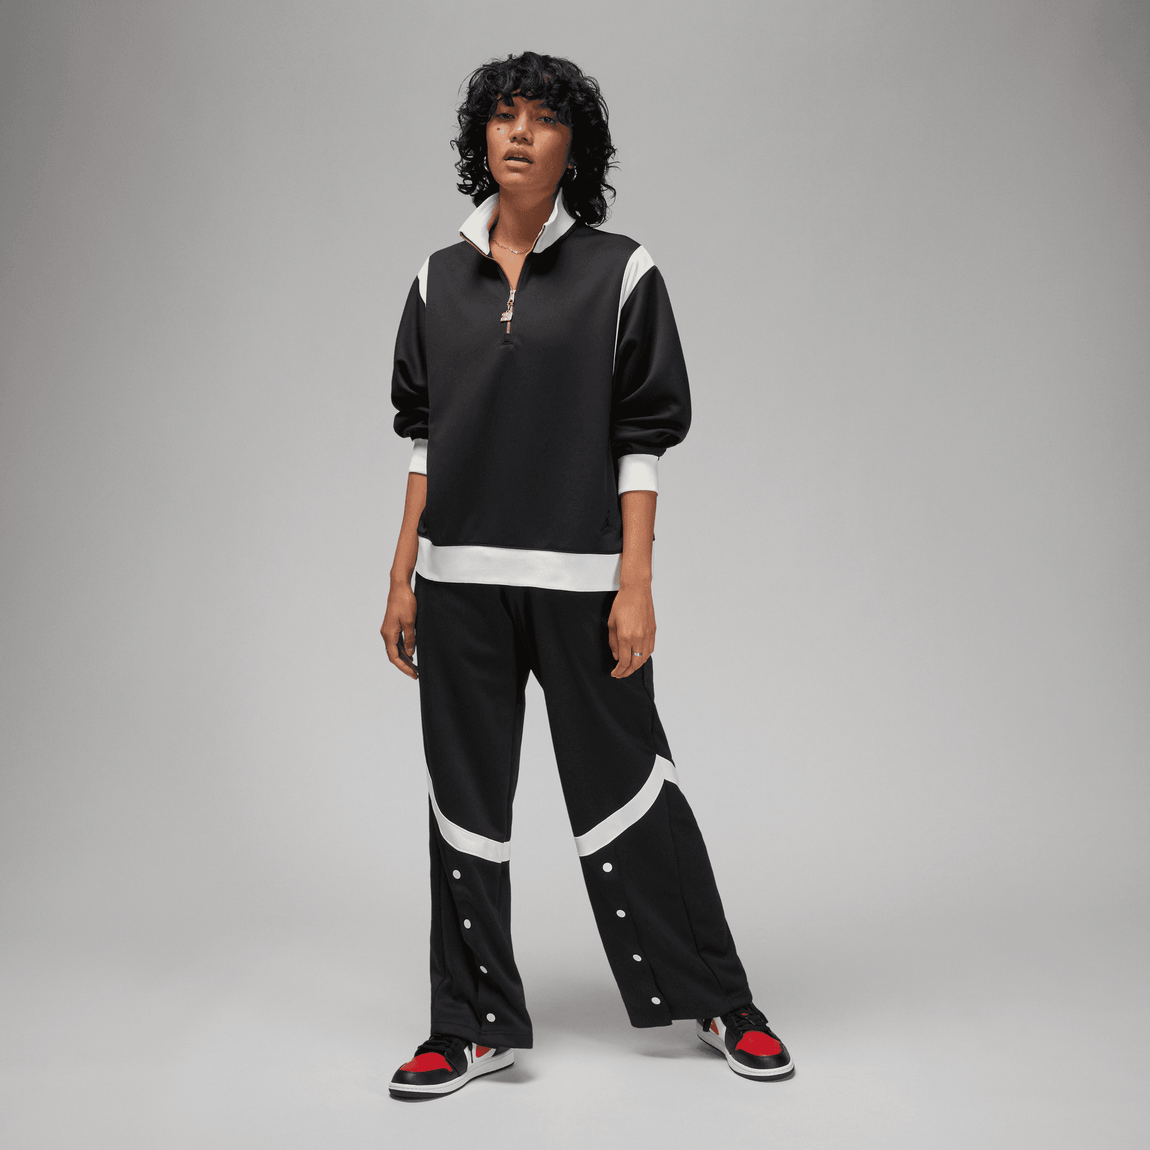 Nike Women's Jordan (Her)itage Suit Pants (Black/Sail) - Nike Women's Jordan (Her)itage Suit Pants (Black/Sail) - 